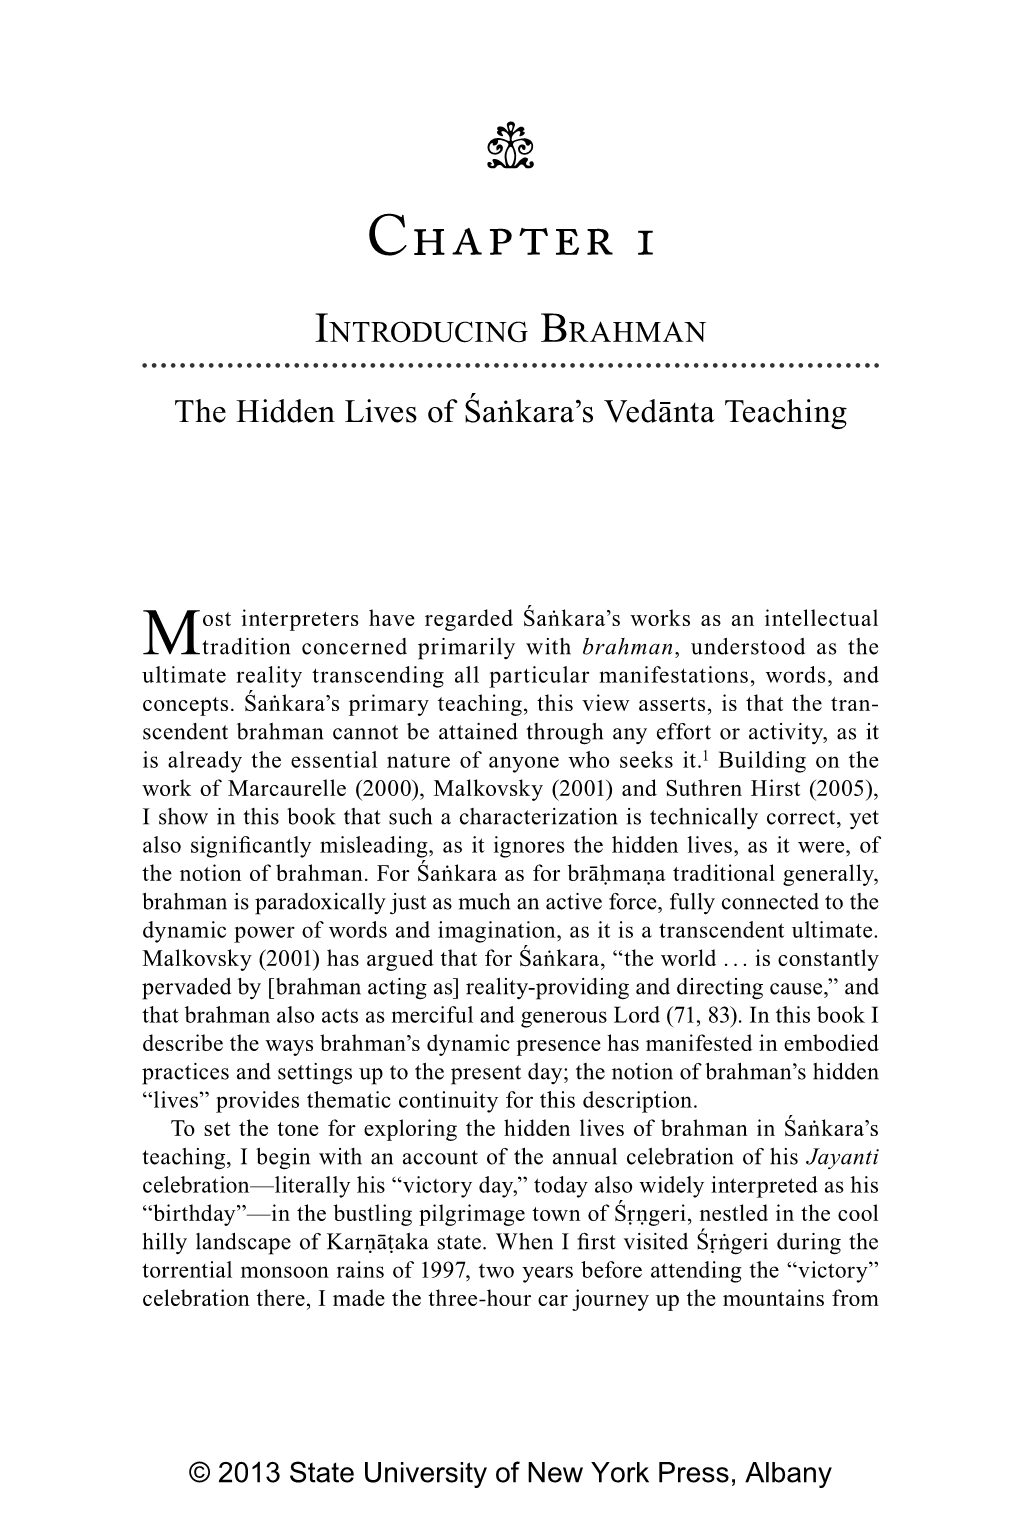 The Hidden Lives of Brahman: Śaṅkara's Vedānta Through His Upaniṣad Commentaries, in Light of Contemporary Practice